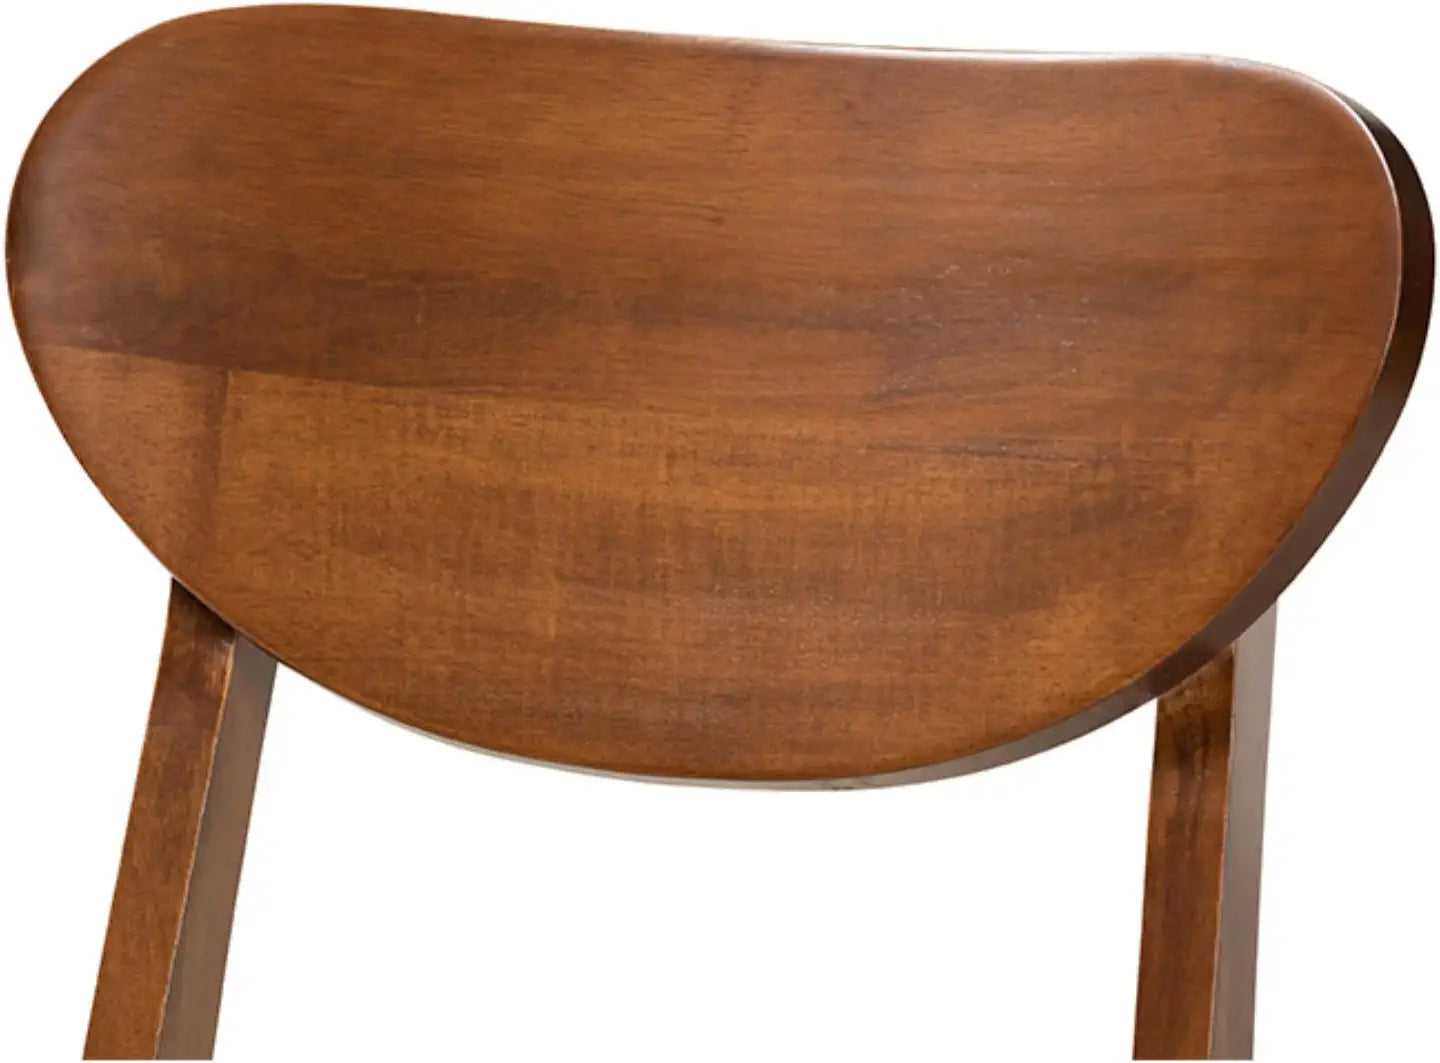 Baxton Studio Damara Mid-Century Modern Grey Fabric Upholstered and Walnut Brown Finished Wood 2-Piece Dining Chair Set